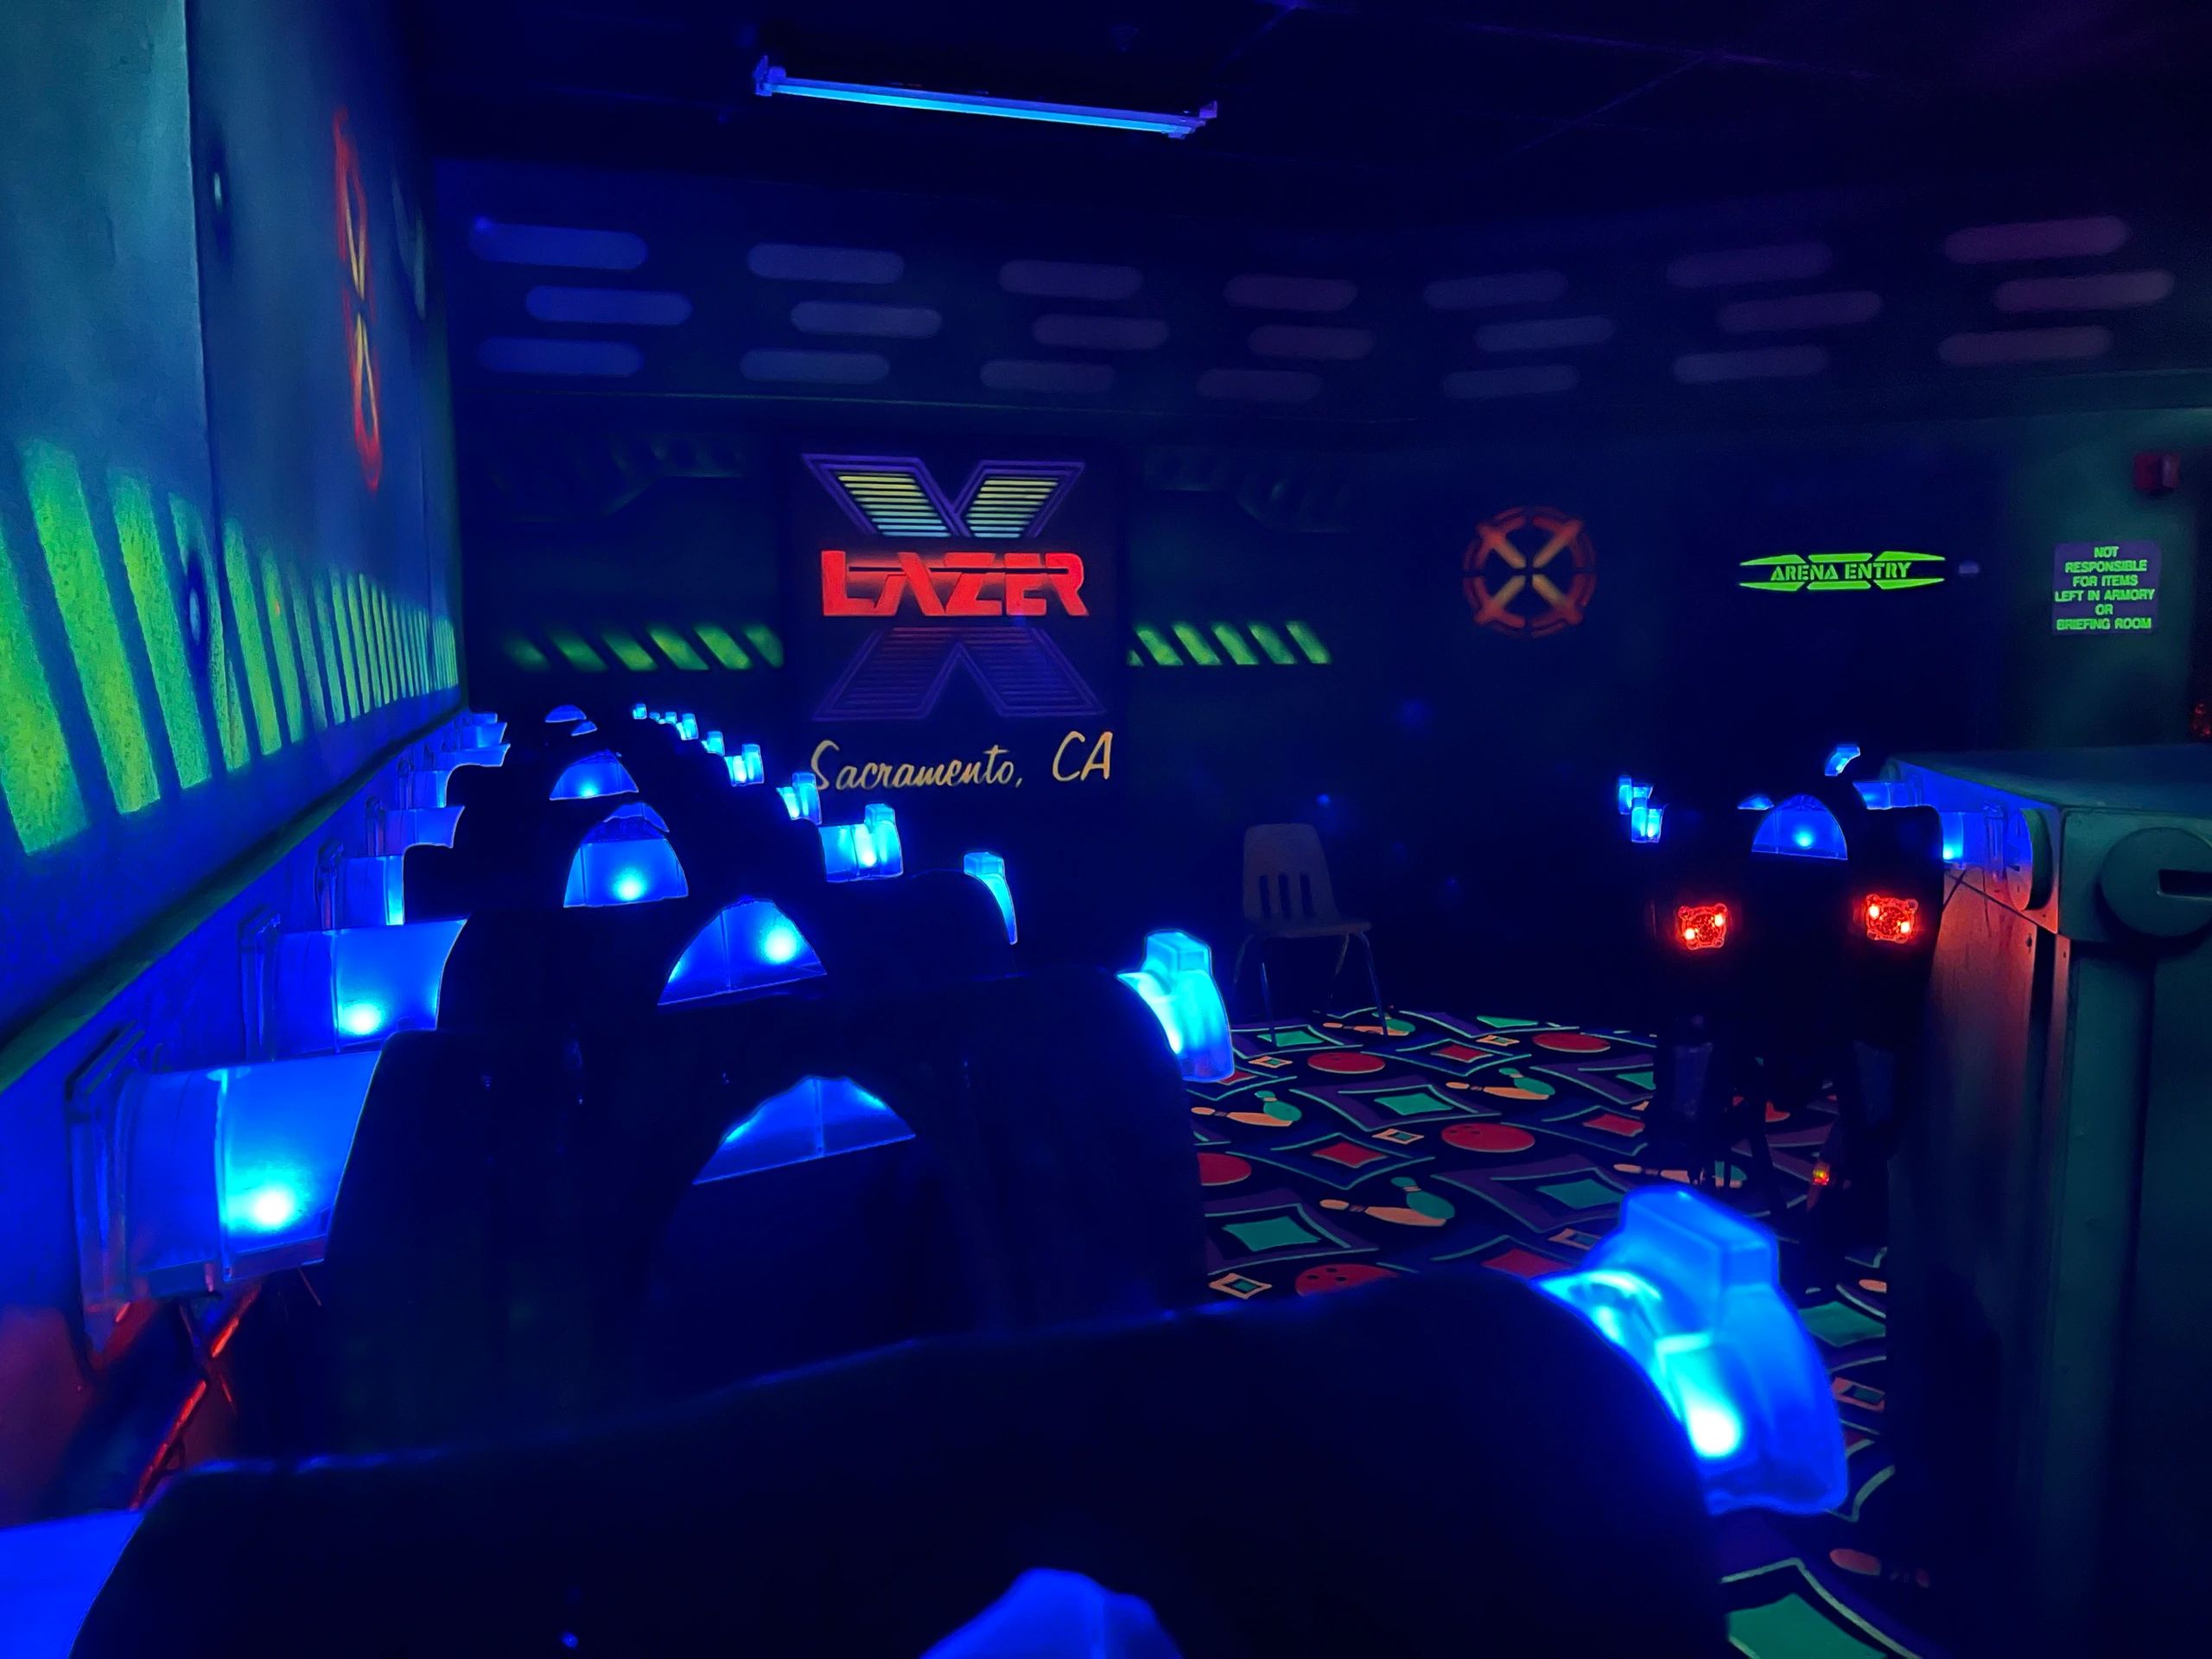 Laser X Laser Tag LongRange – Grey Duck Games & Toys